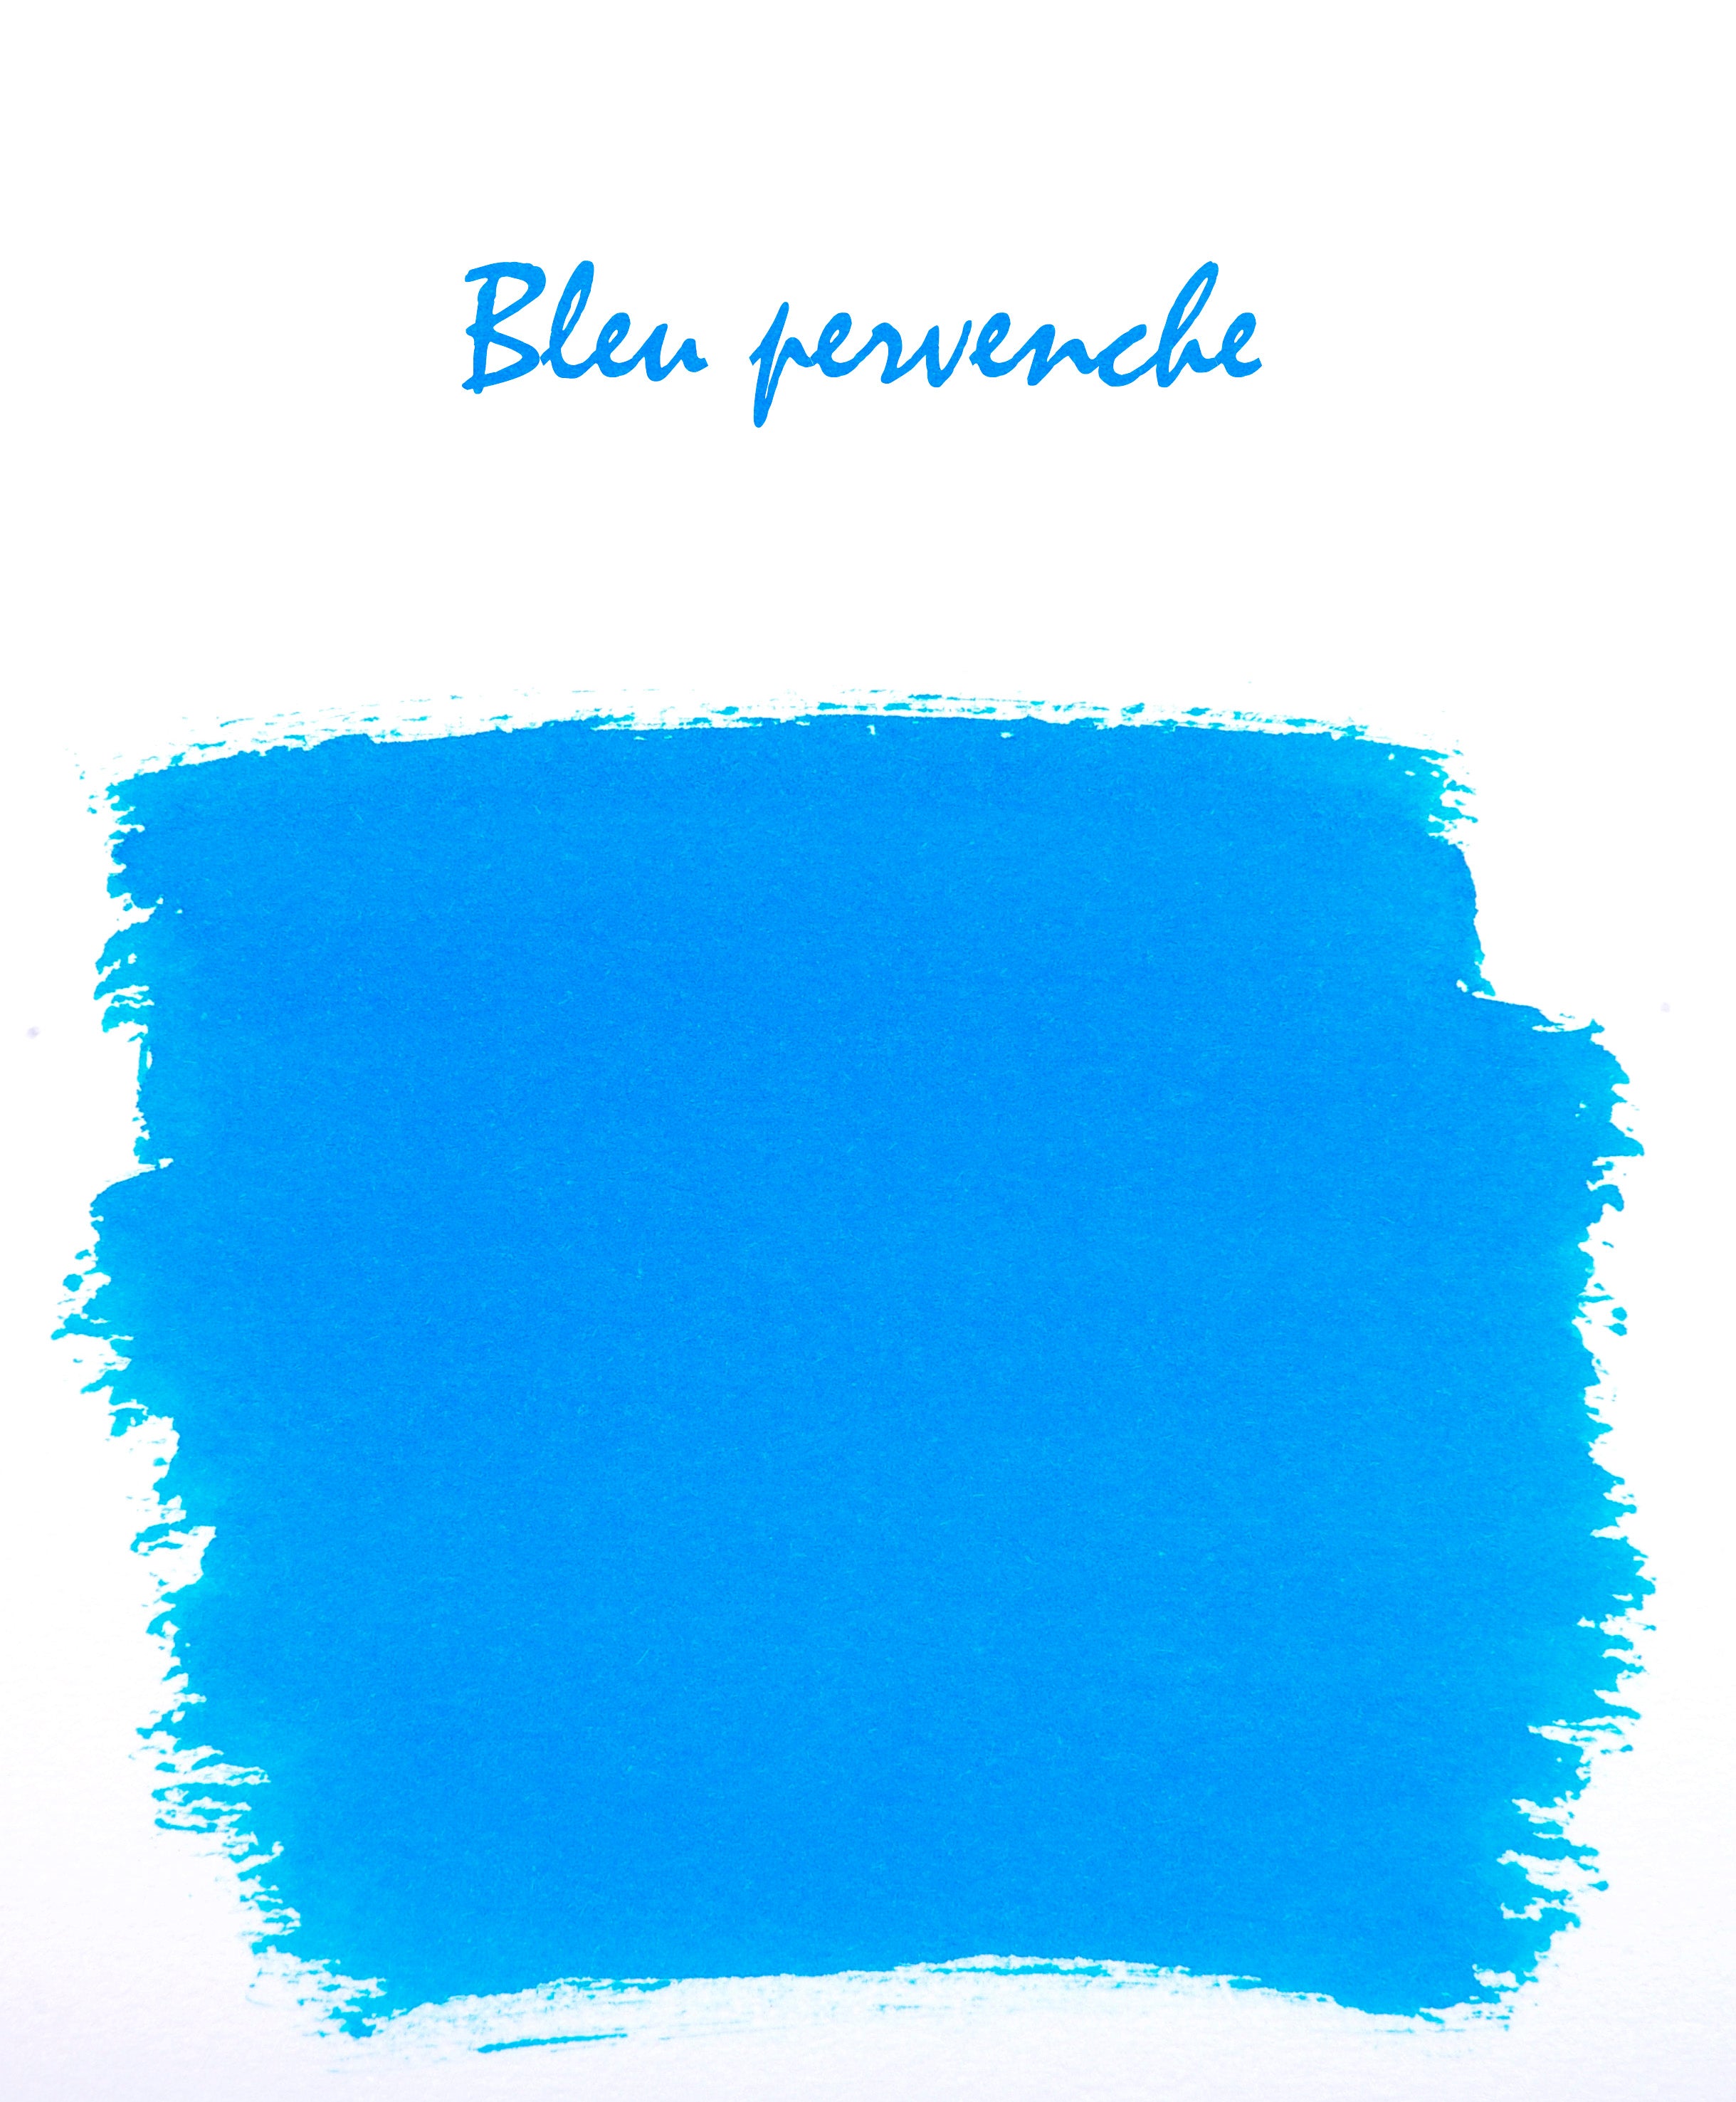 Herbin - Bleu pervenche (hellblau), 30 ml